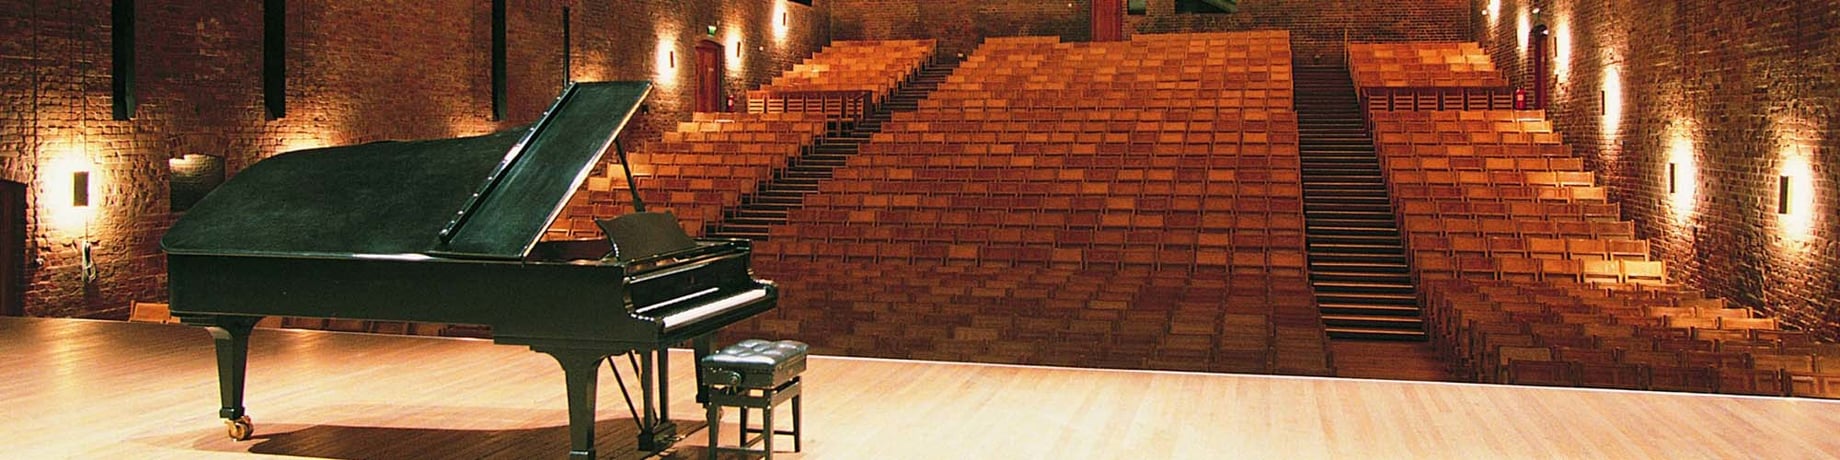 Snape Maltings Concert Hall